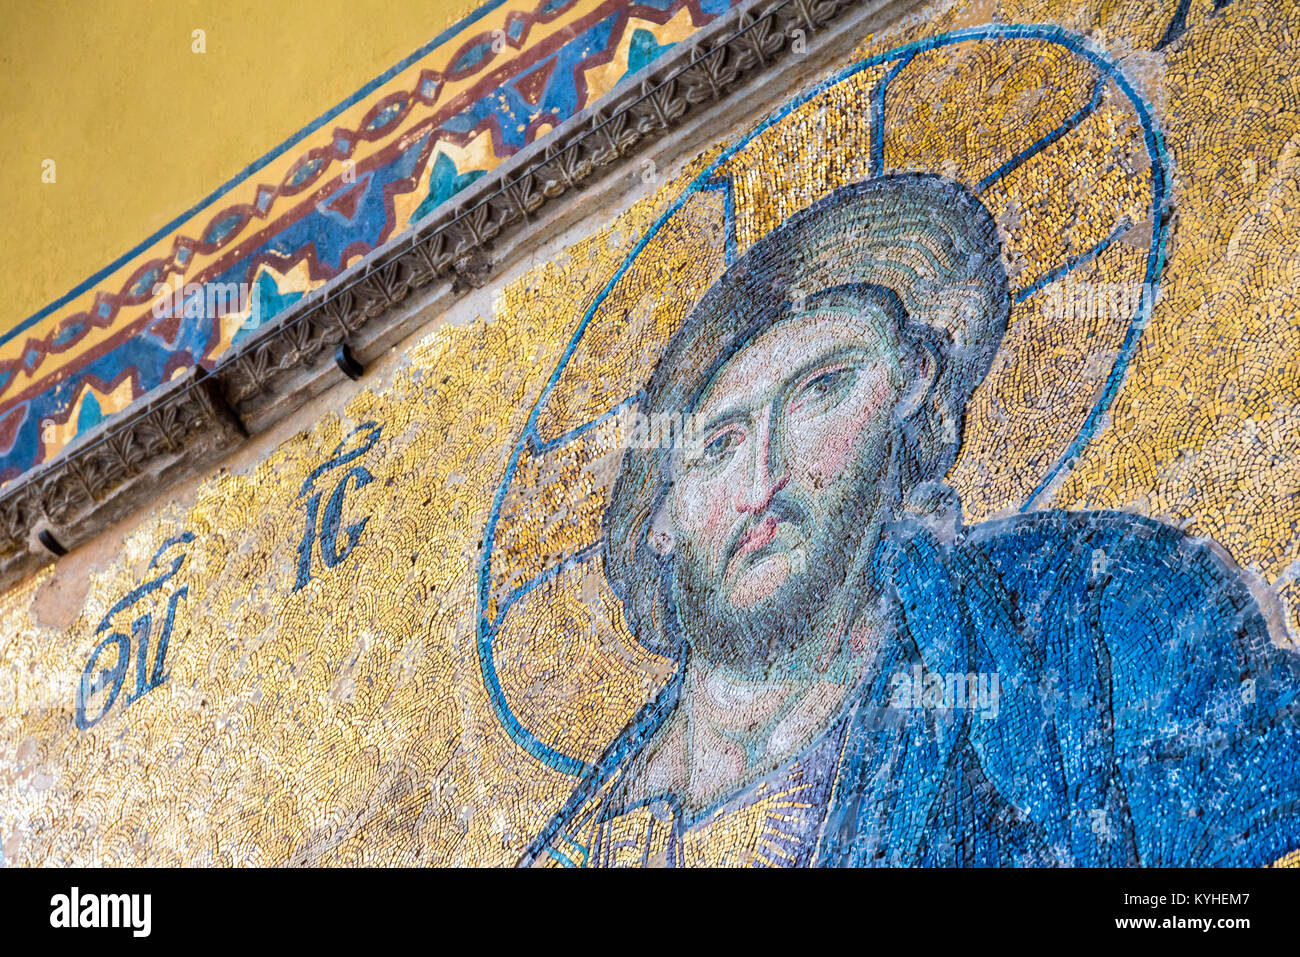 Jesus Christ Pantocrator,Detail from deesis Byzantine mosaic in Hagia Sophia,Greek Orthodox Christian patriarchal basilica,church.Istanbul, Turkey,Mar Stock Photo